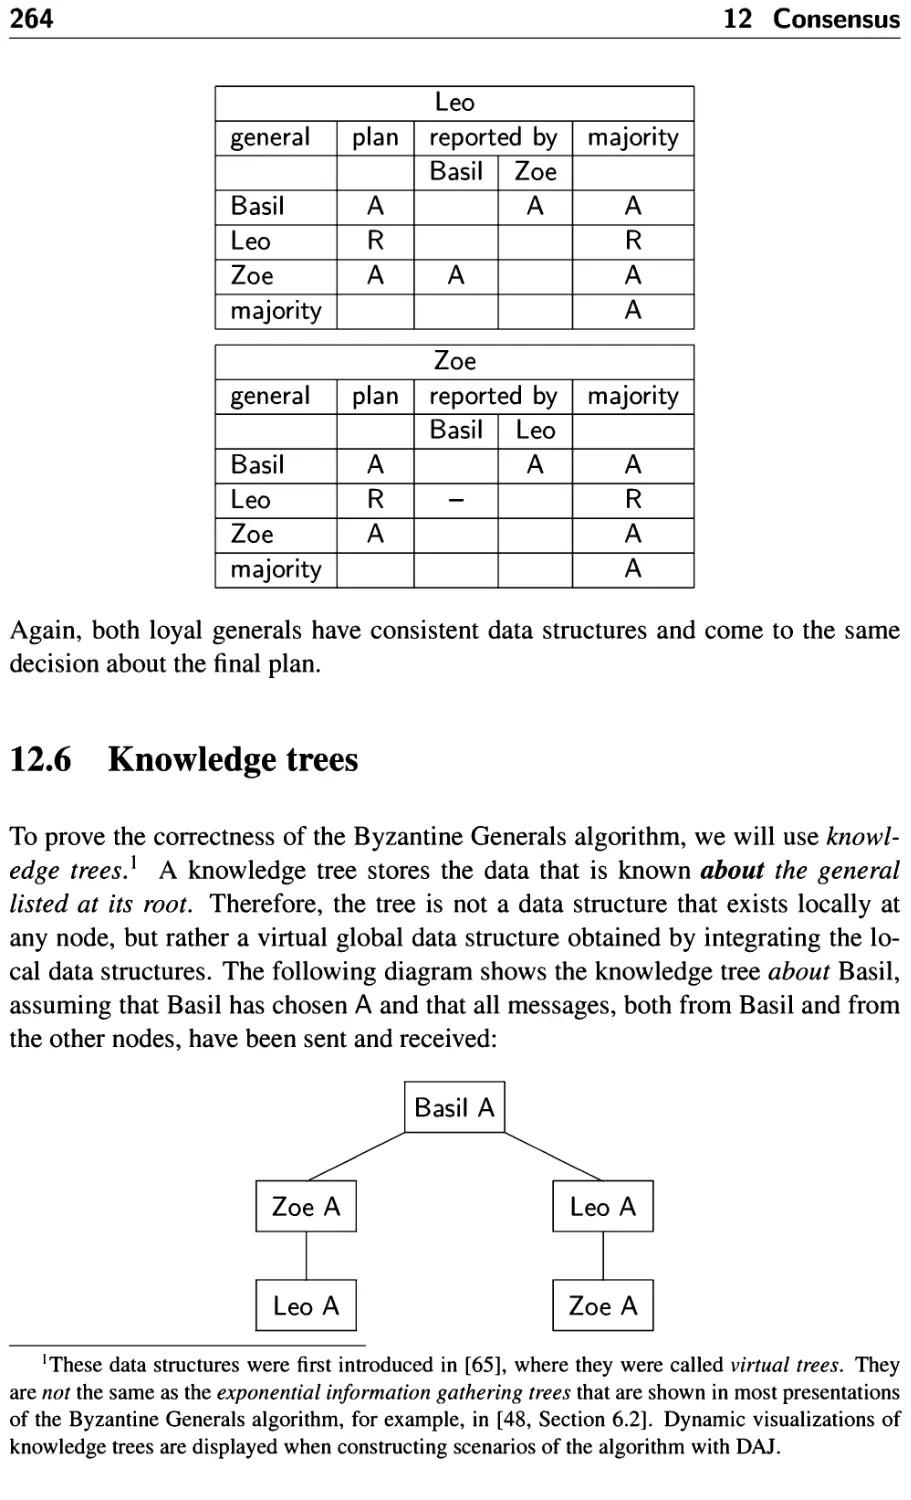 12.6 Knowledge trees